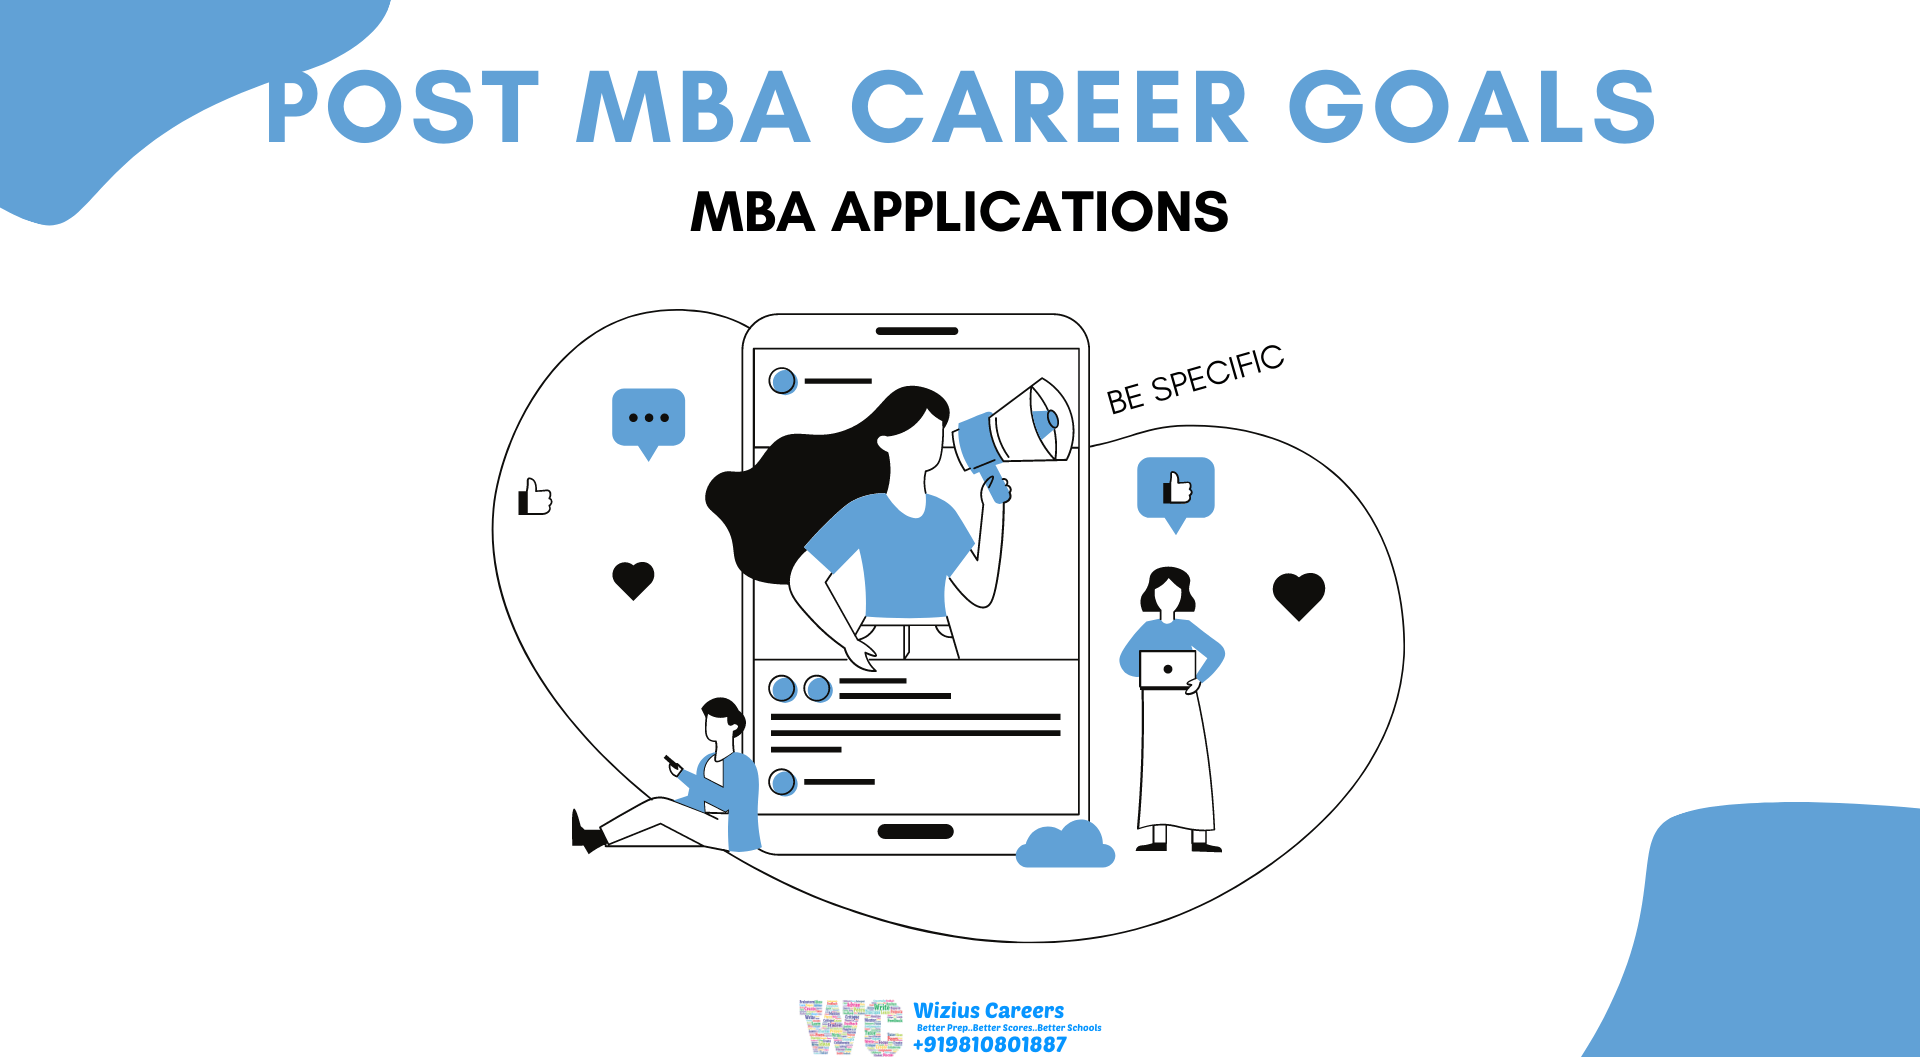 MBA Applications: Explain Post-MBA Career Goals